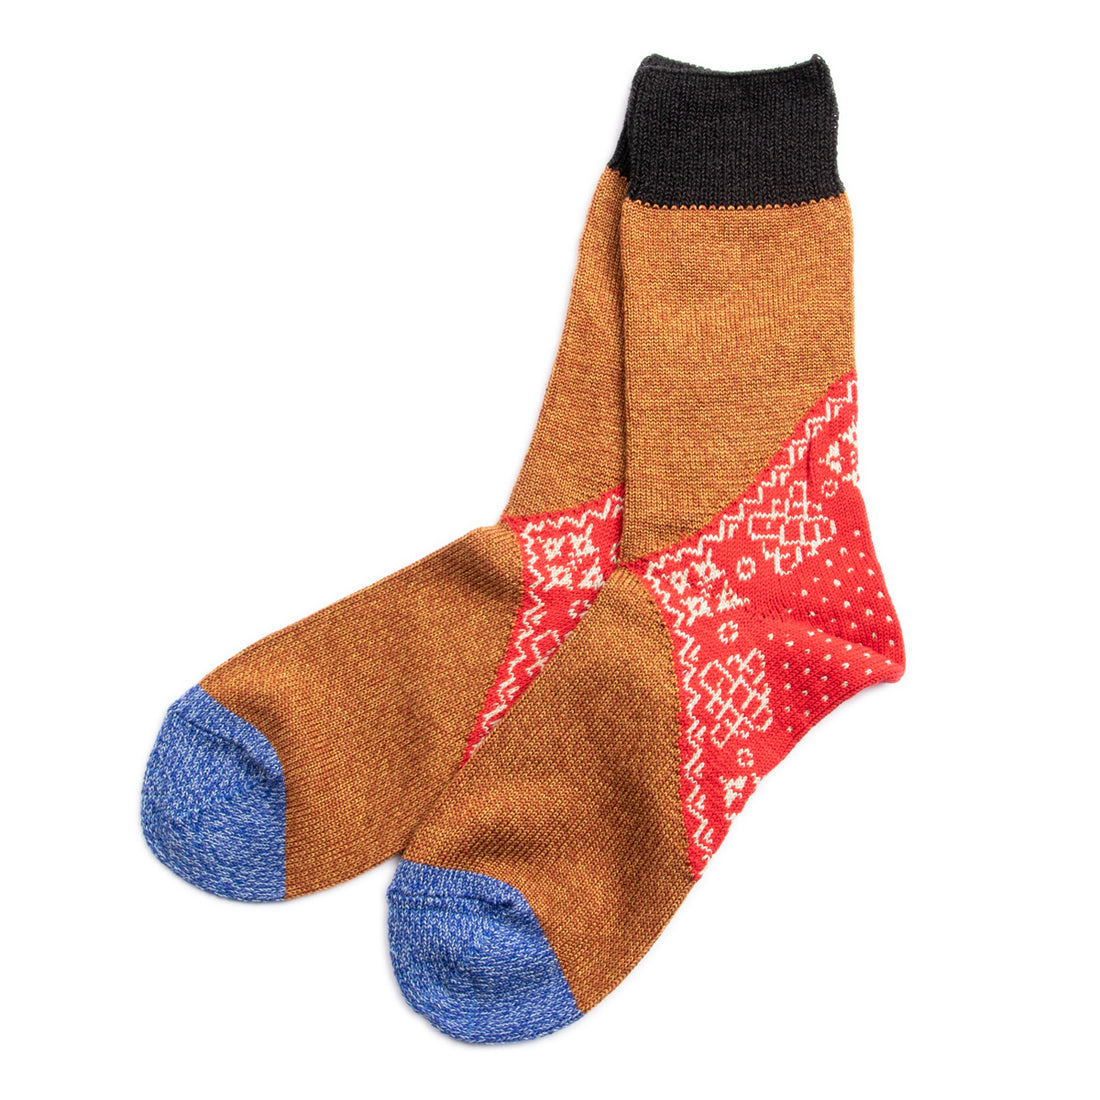 Kapital 96 Yarns Wool Heel Bandana Socks - Red - Standard & Strange